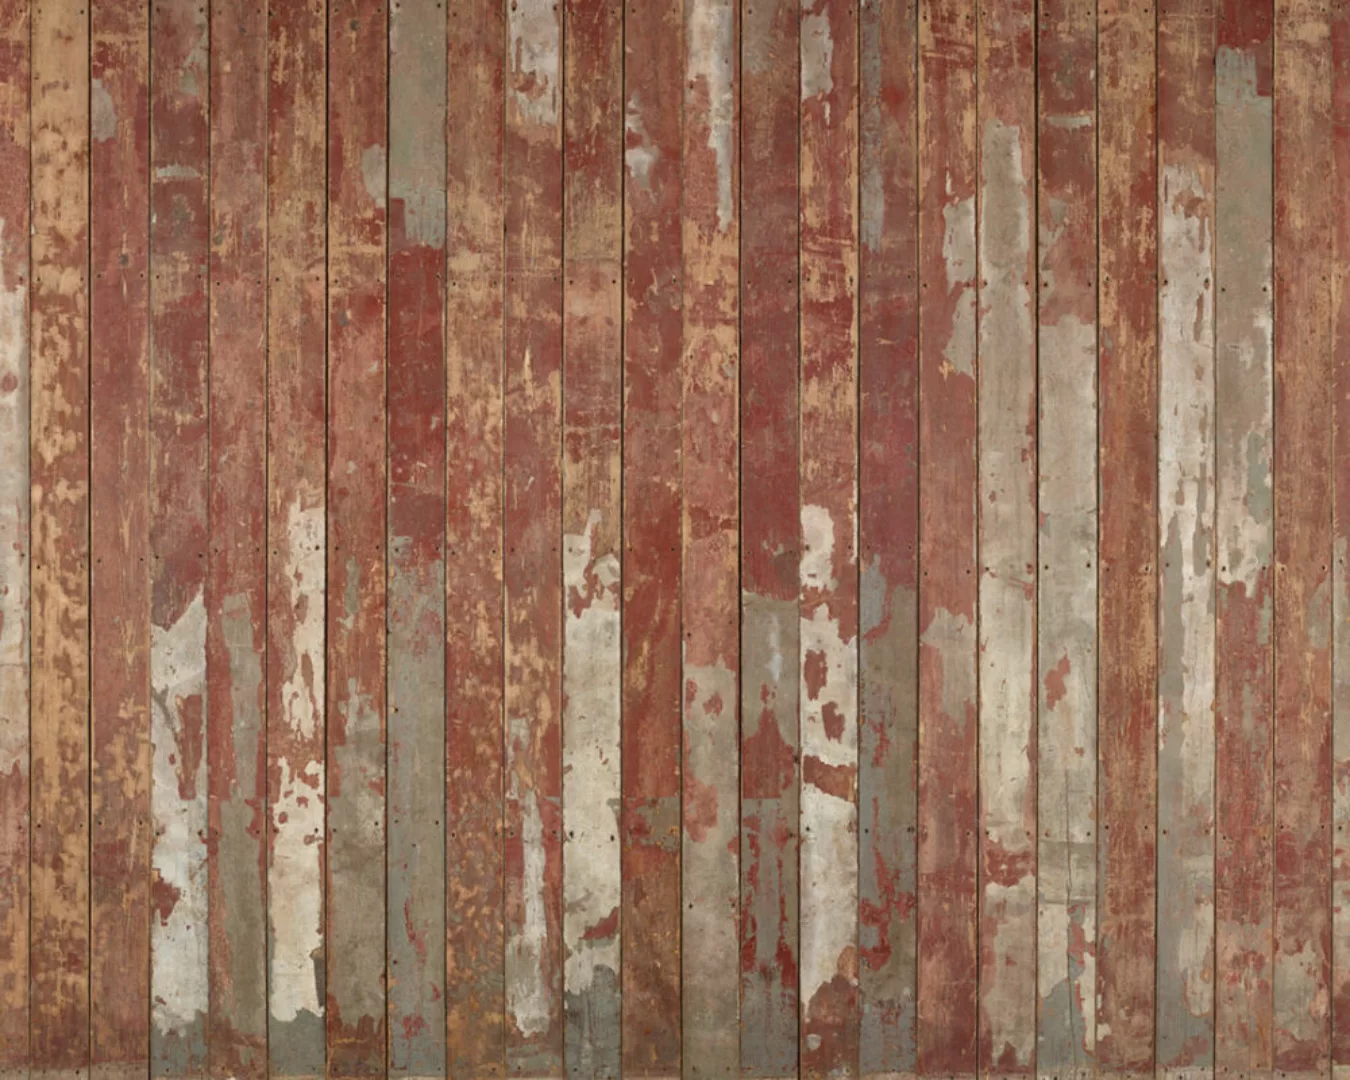 Fototapete "Buntes Holz" 4,00x2,50 m / Glattvlies Perlmutt günstig online kaufen